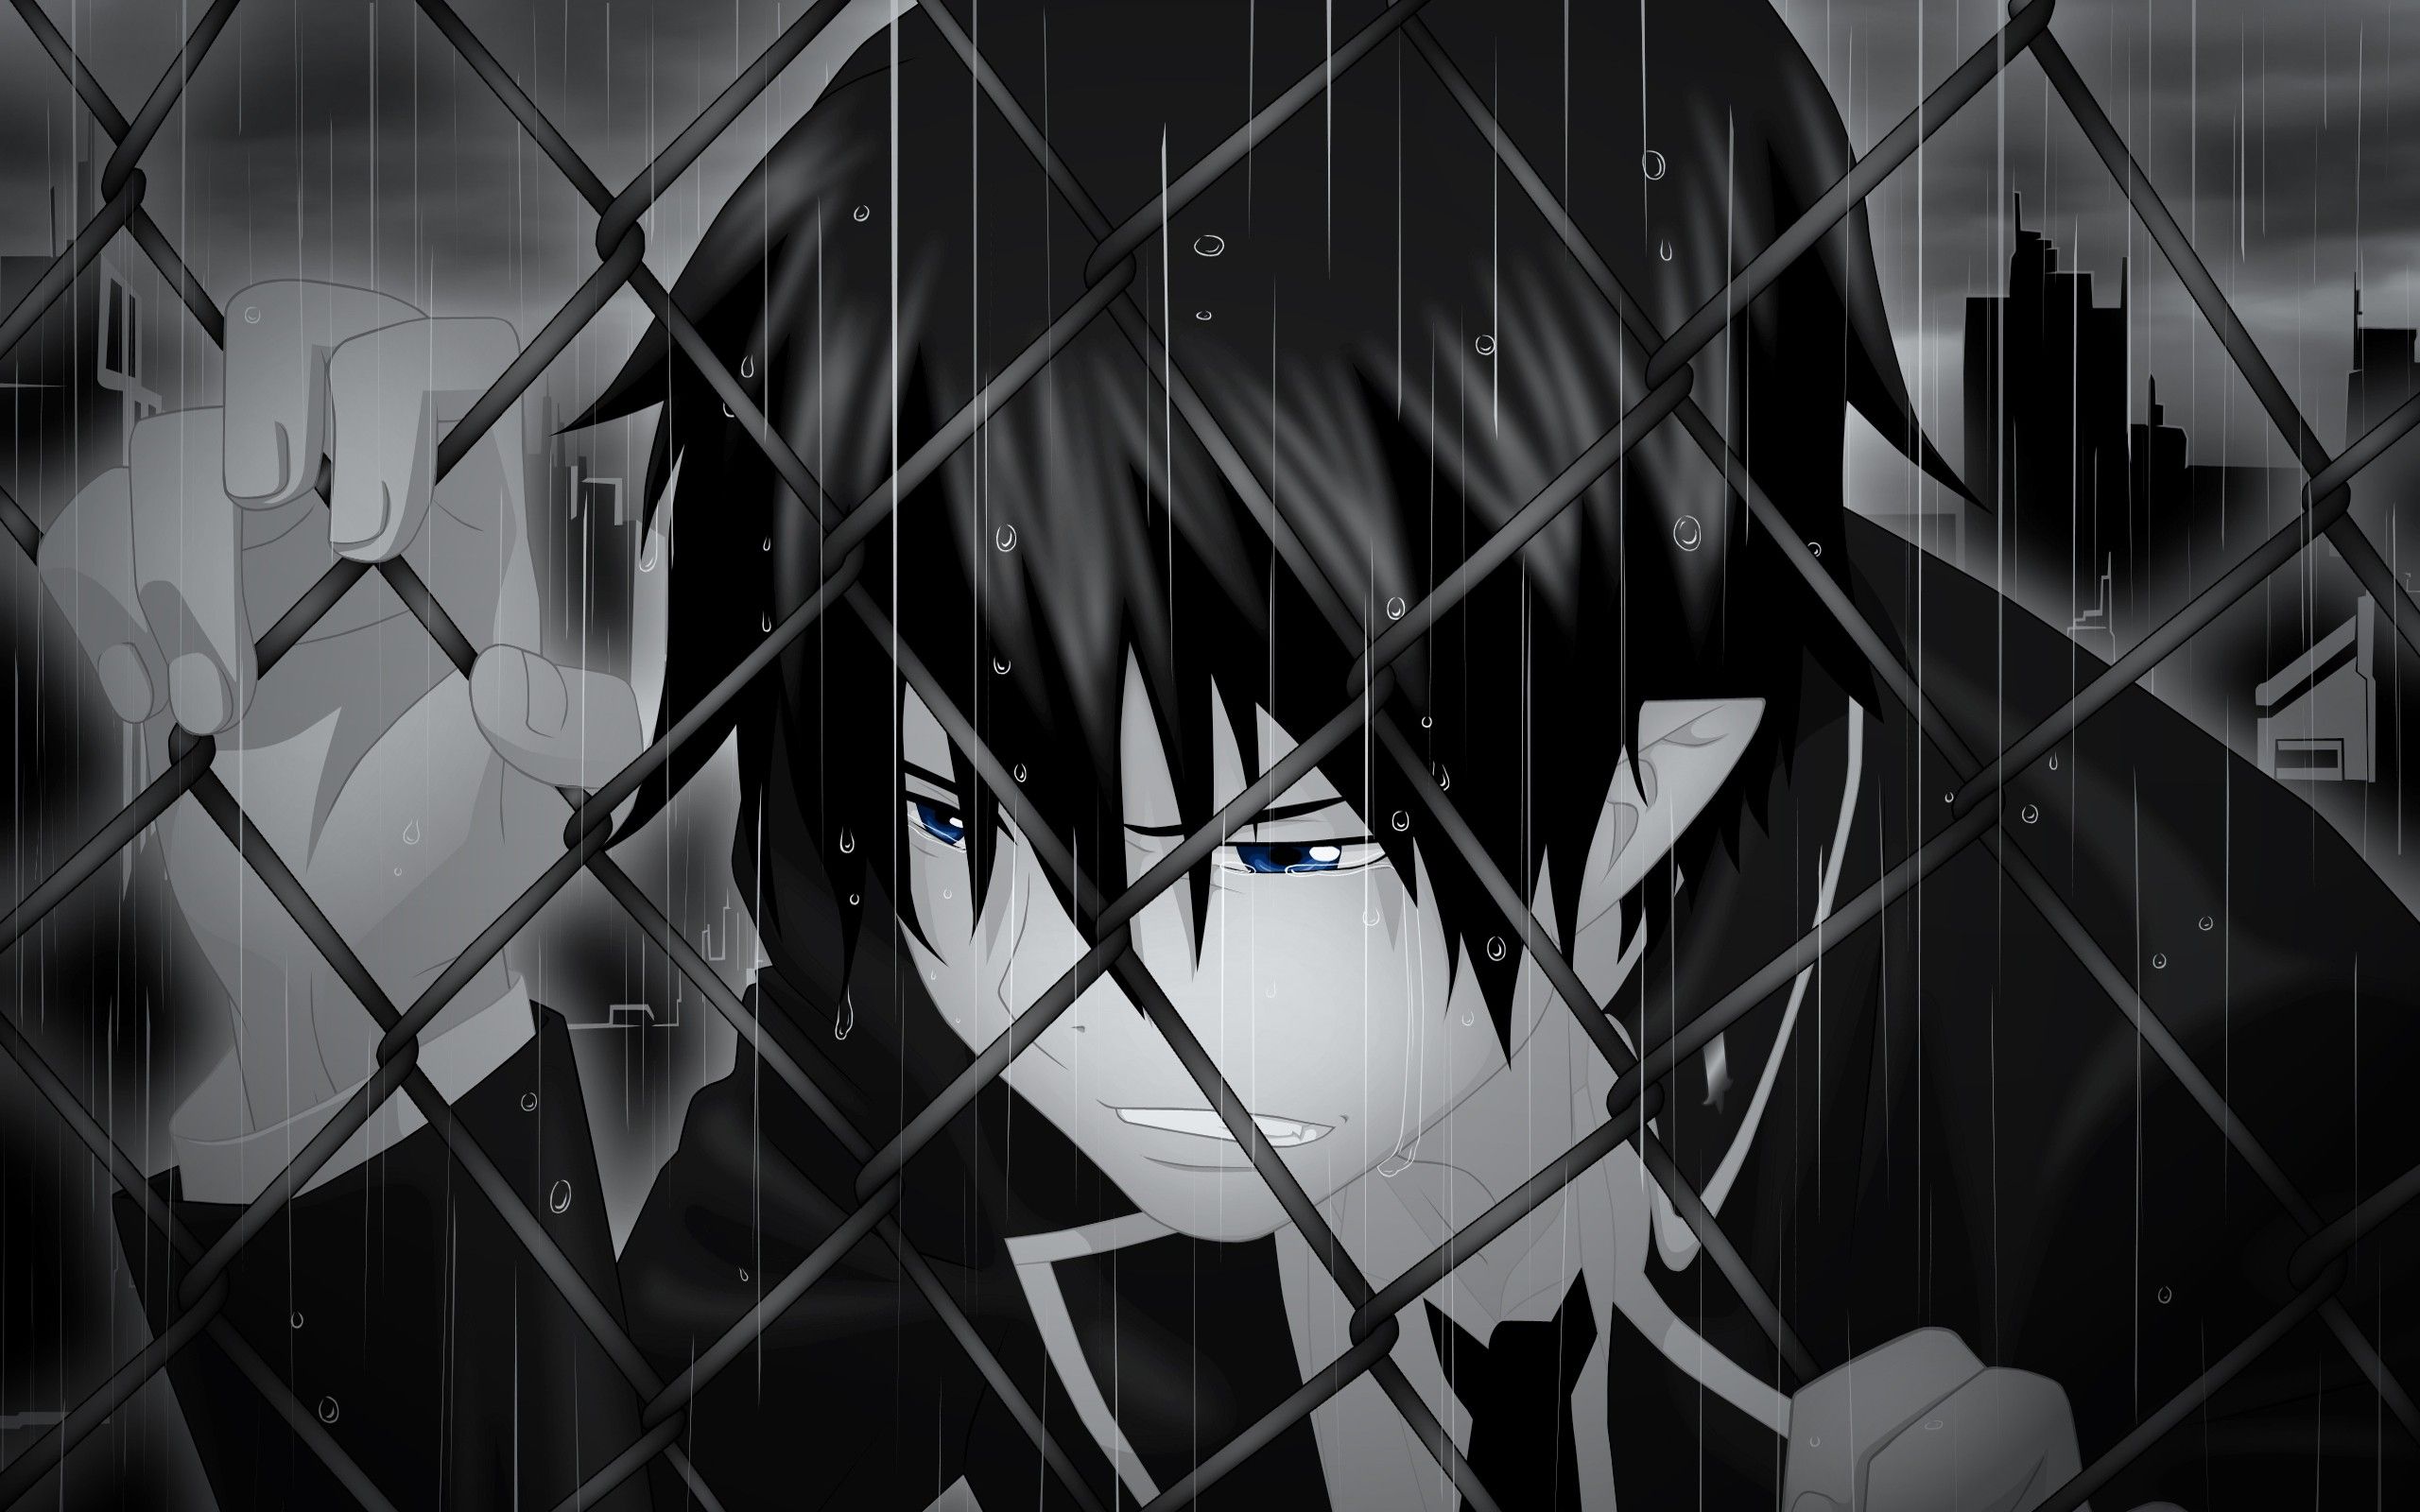 Anime Sad Boy Backgrounds Download HD Image Amazing Backgrounds Image Mac Desktop Wallpapers 4k Pictures Tablet 2560x1600